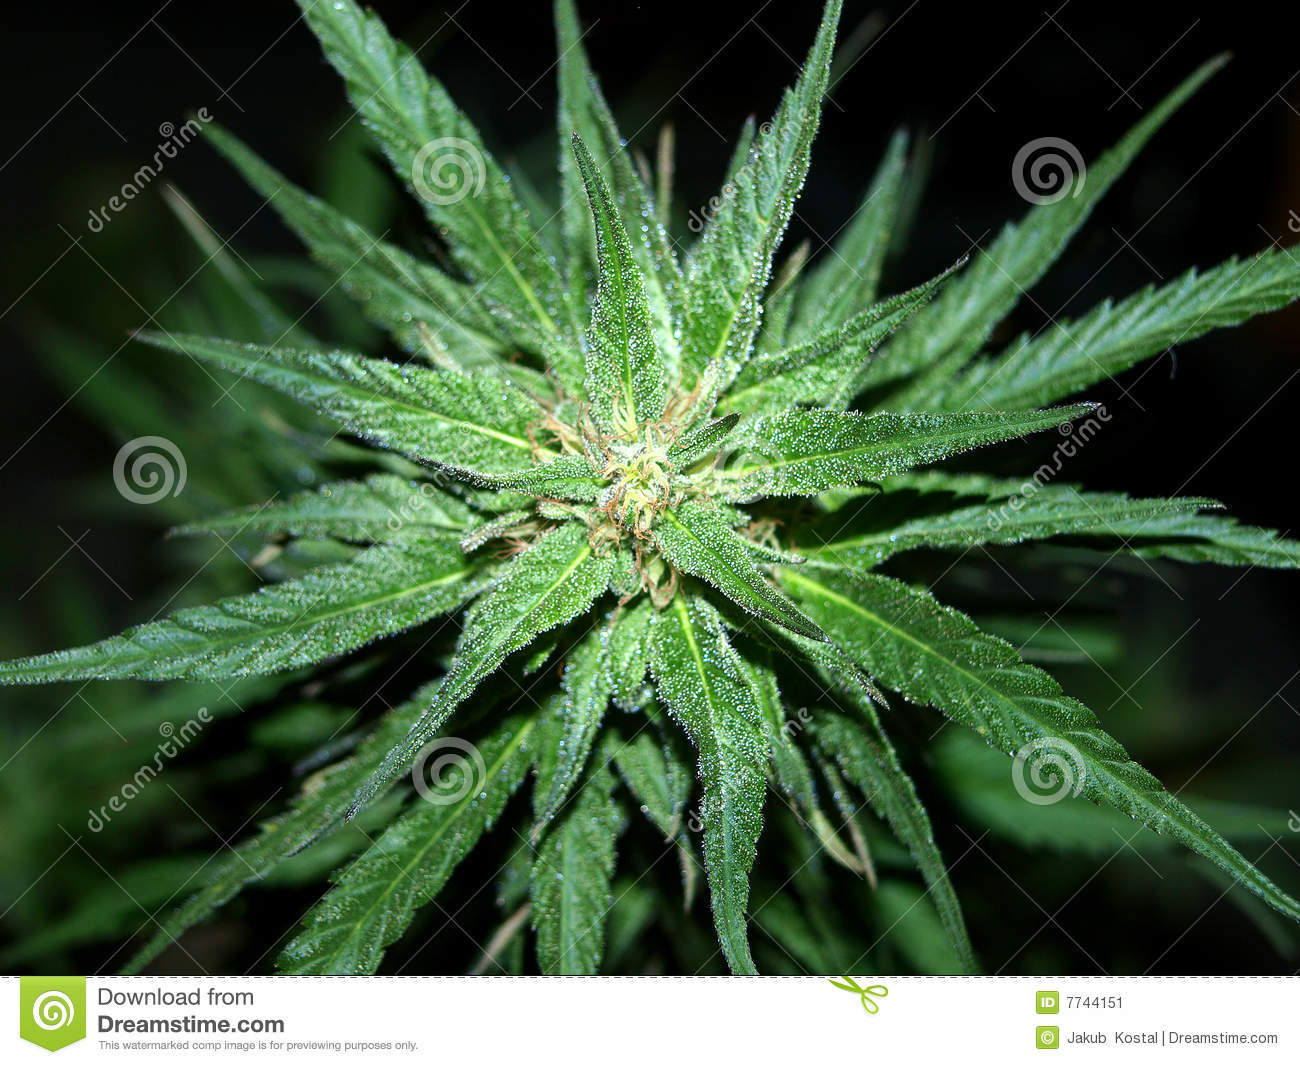 Marijuana Stock Image   Image  7744151